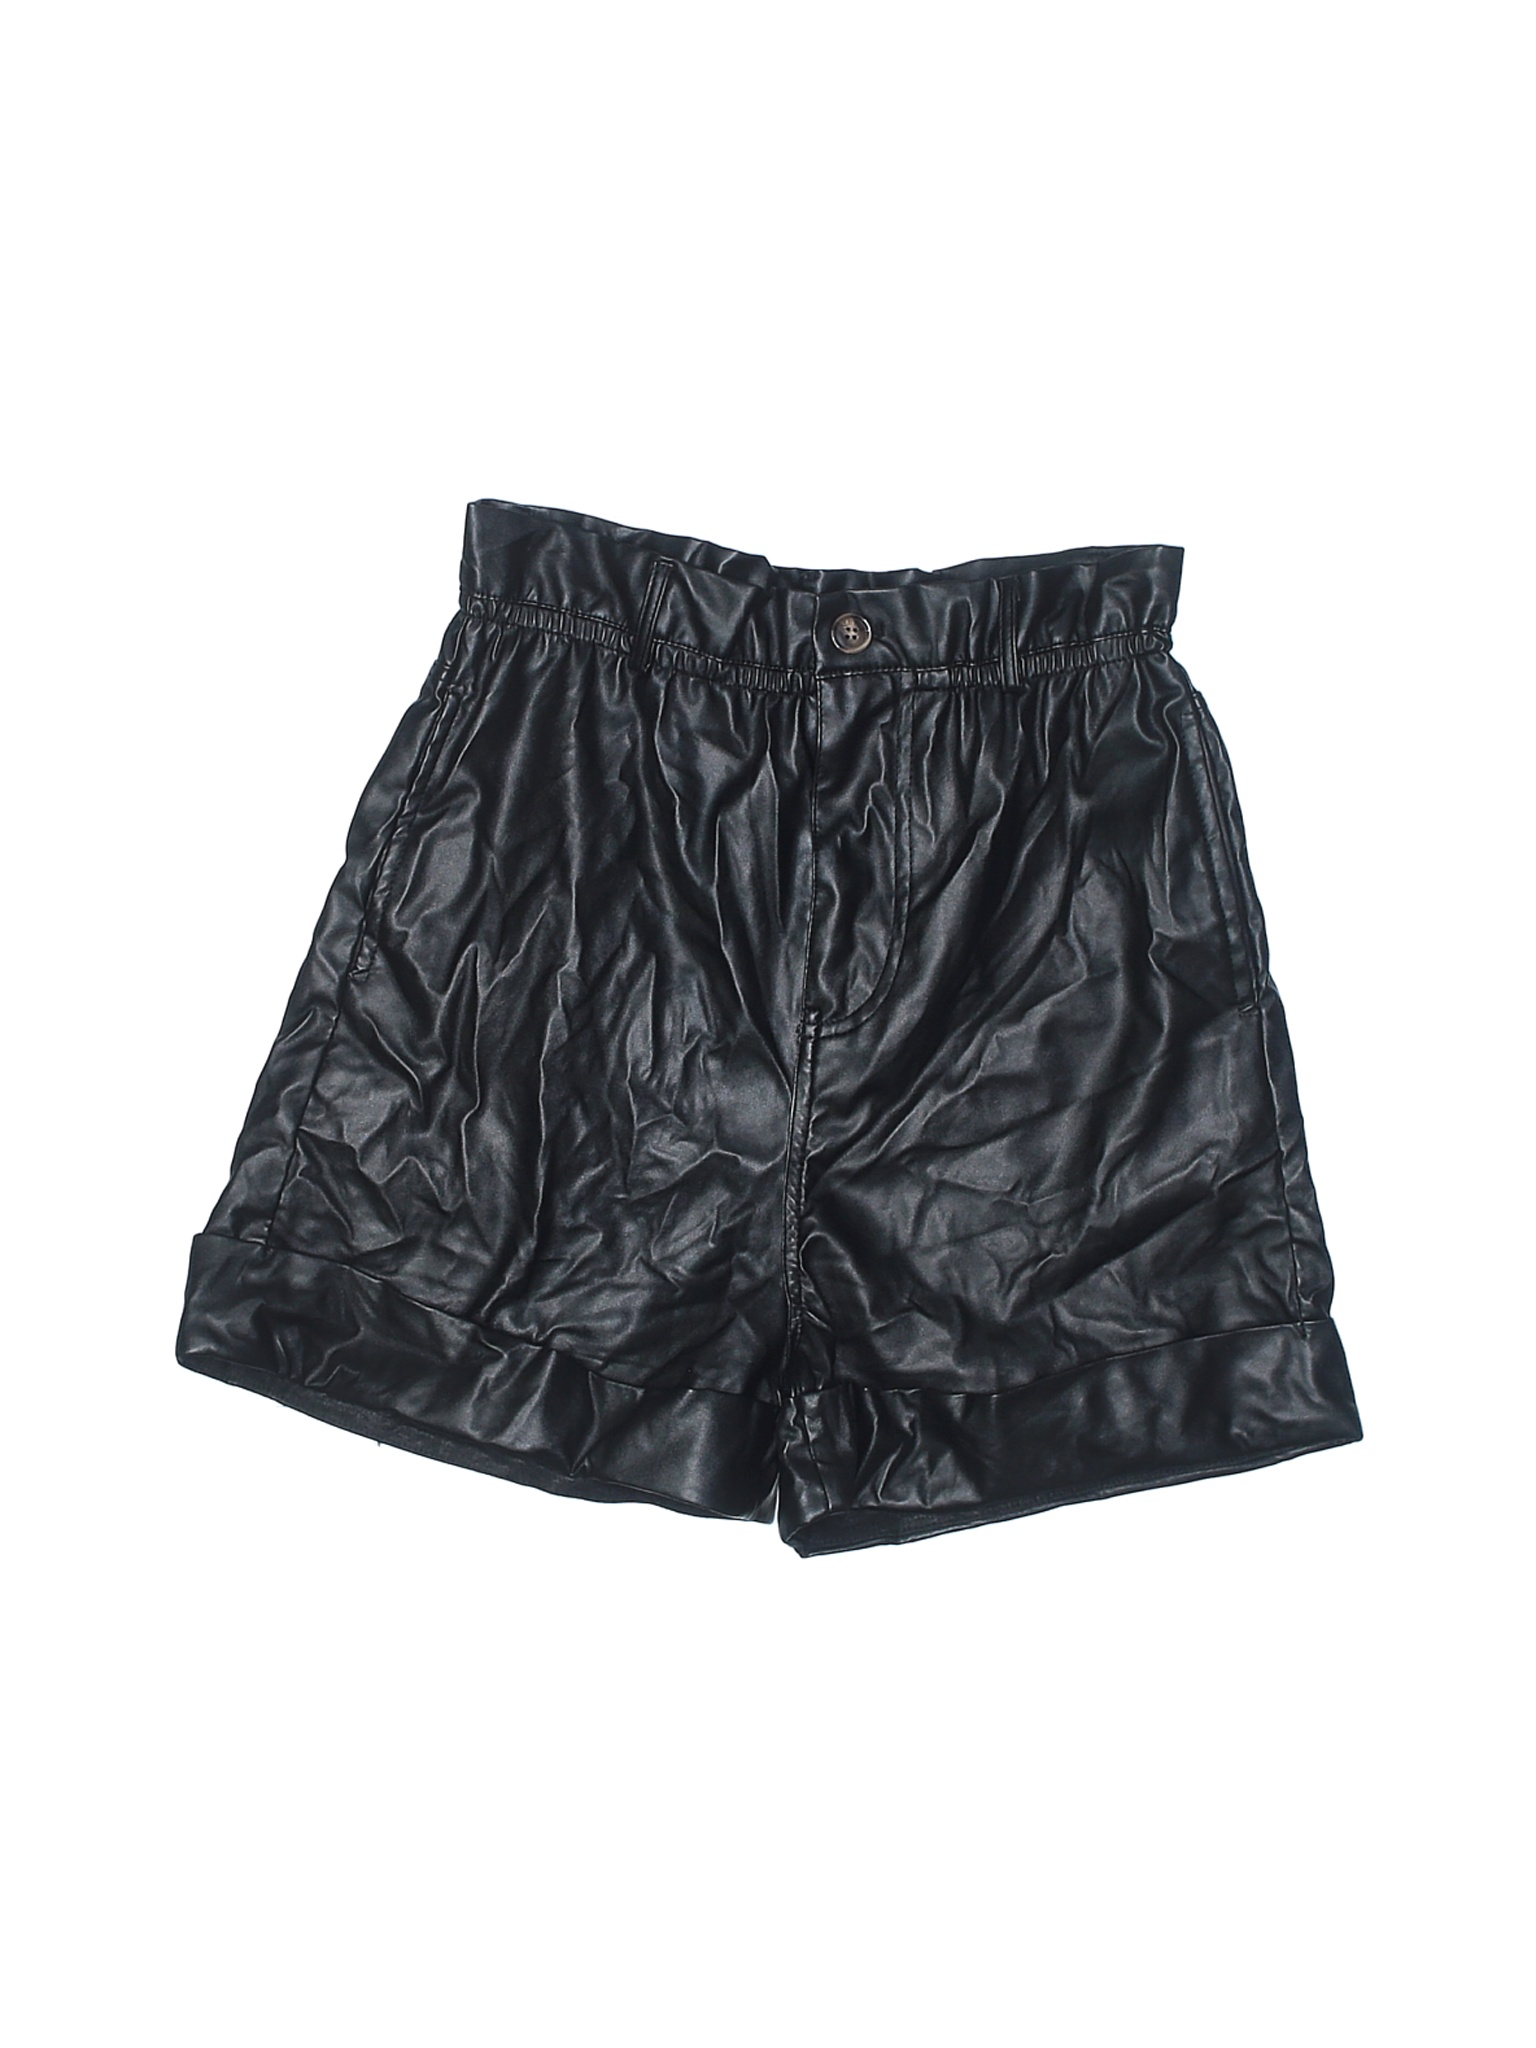 Shein Women Black Faux Leather Shorts XS | eBay